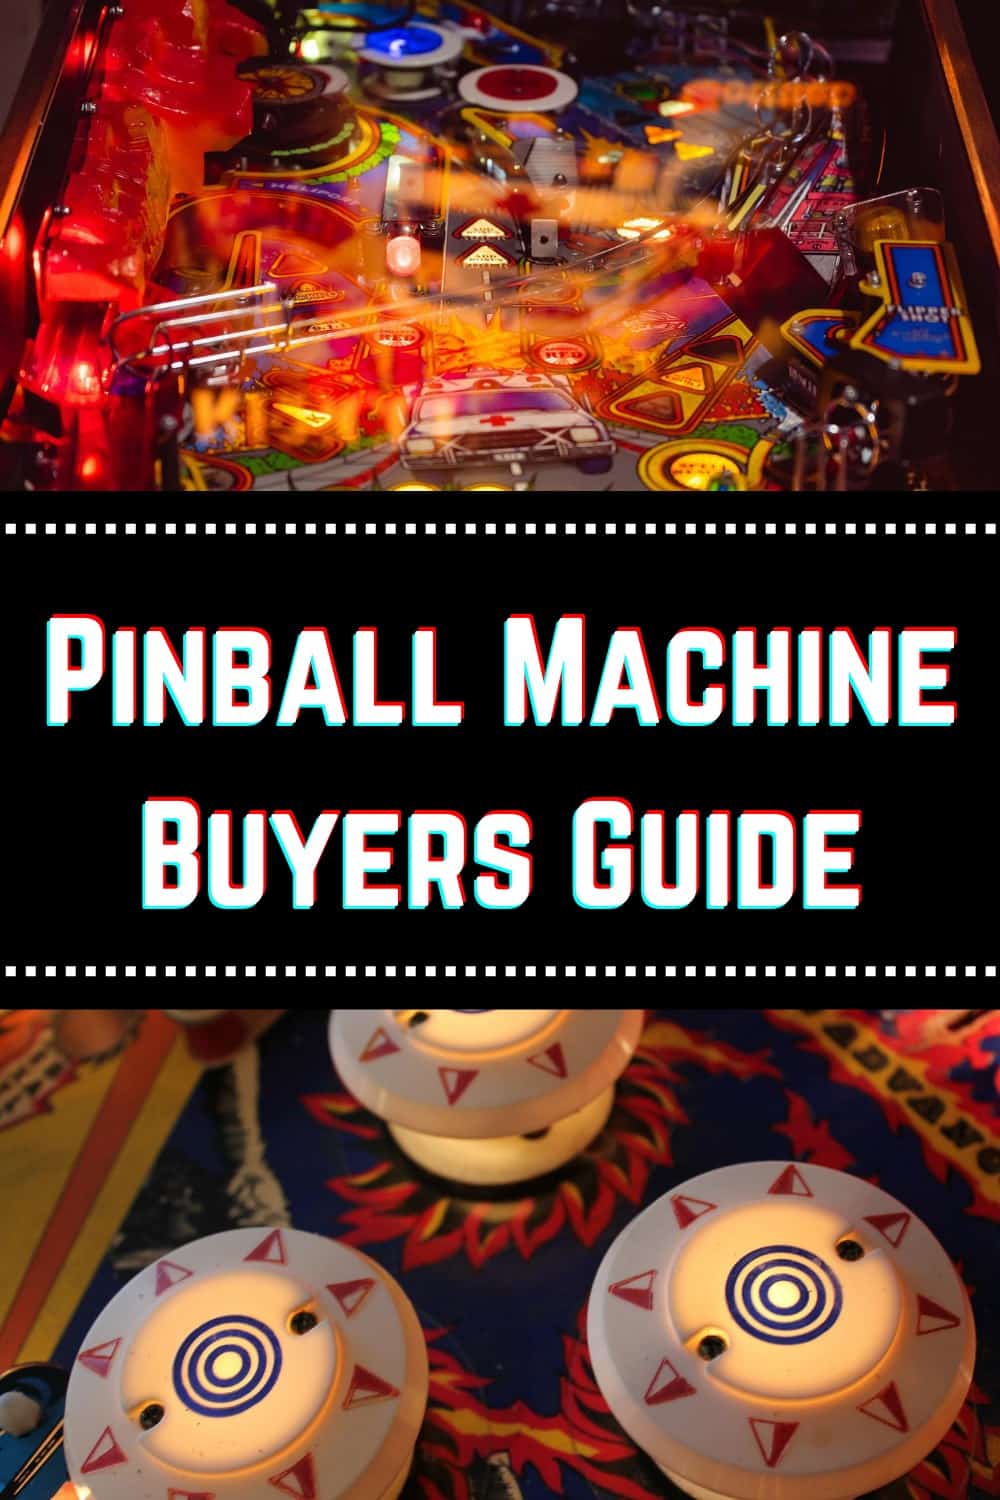 How To Buy A Pinball Machine